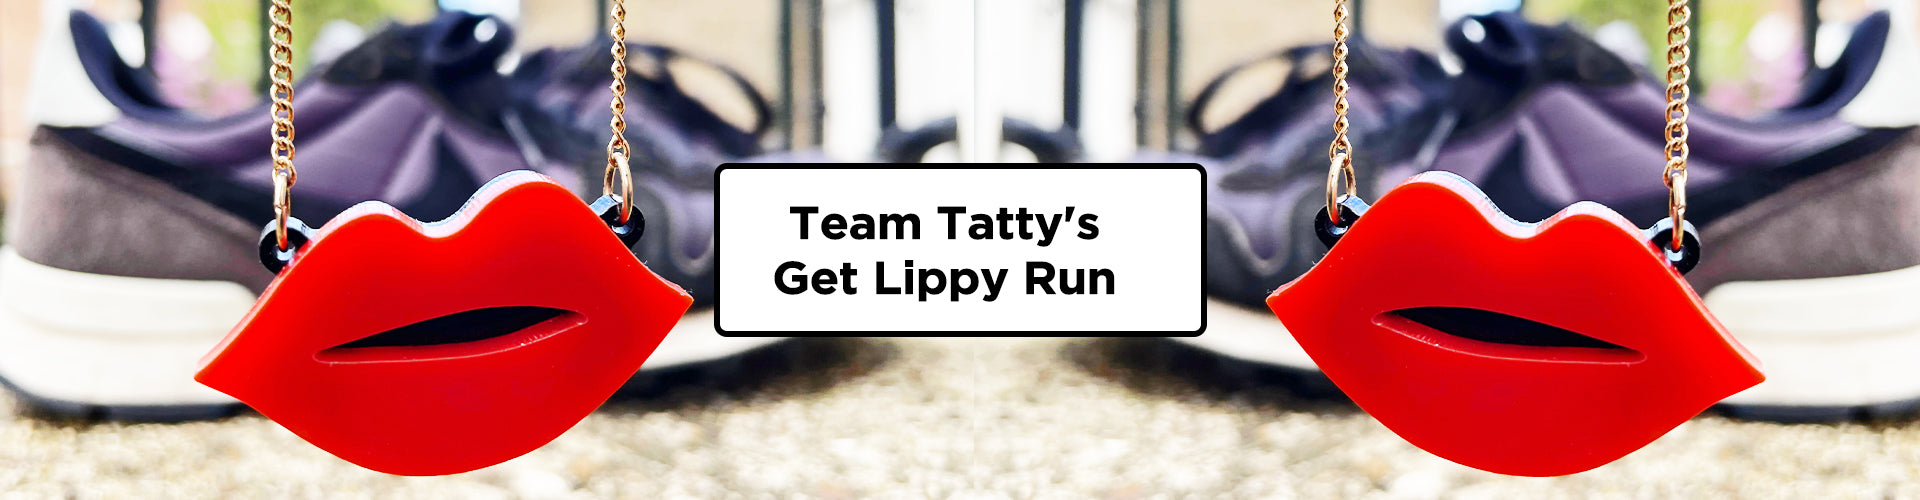 Team Tatty's Get Lippy Run